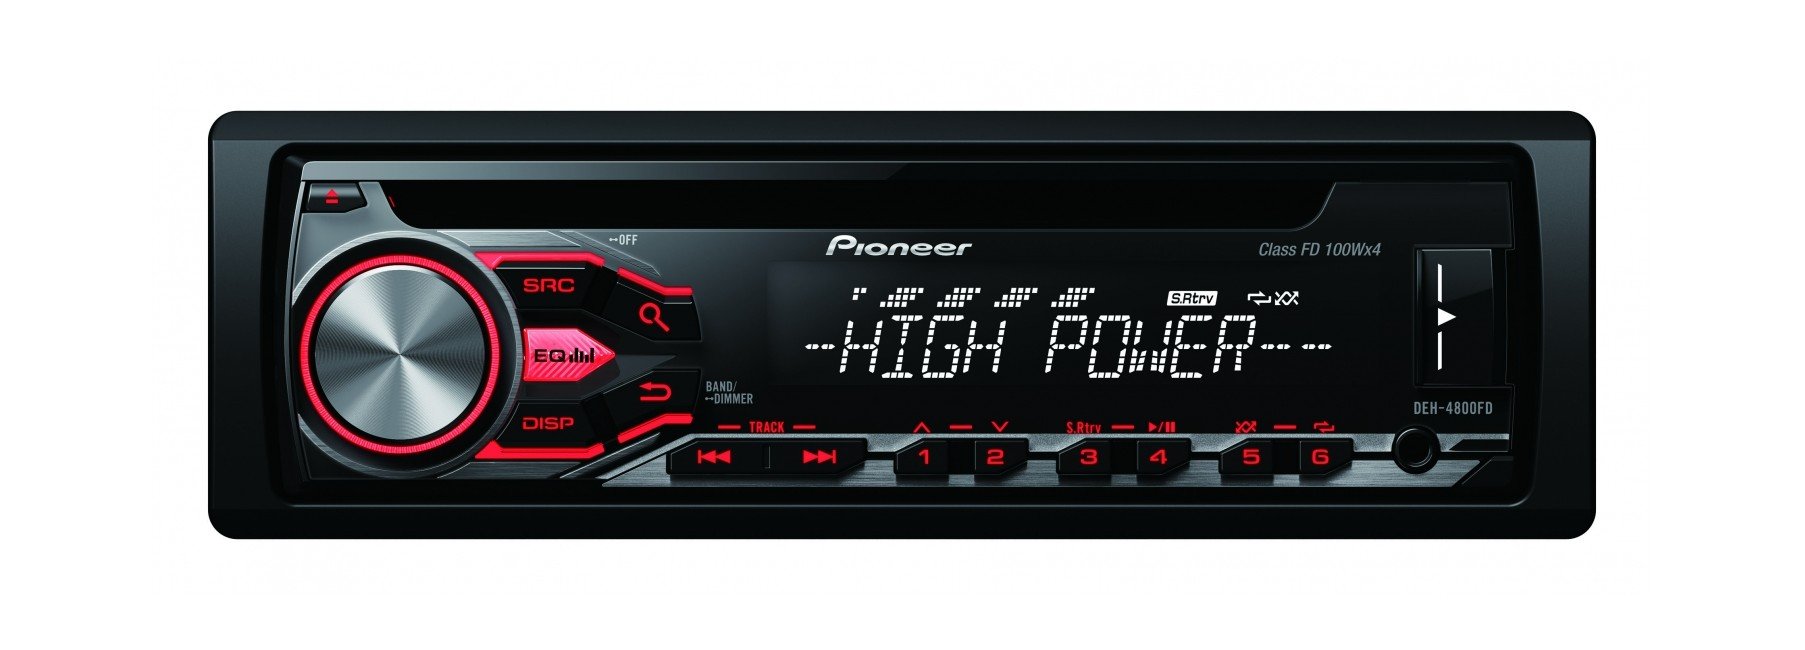 Pioneer DEH-4800FD - High power bilradio